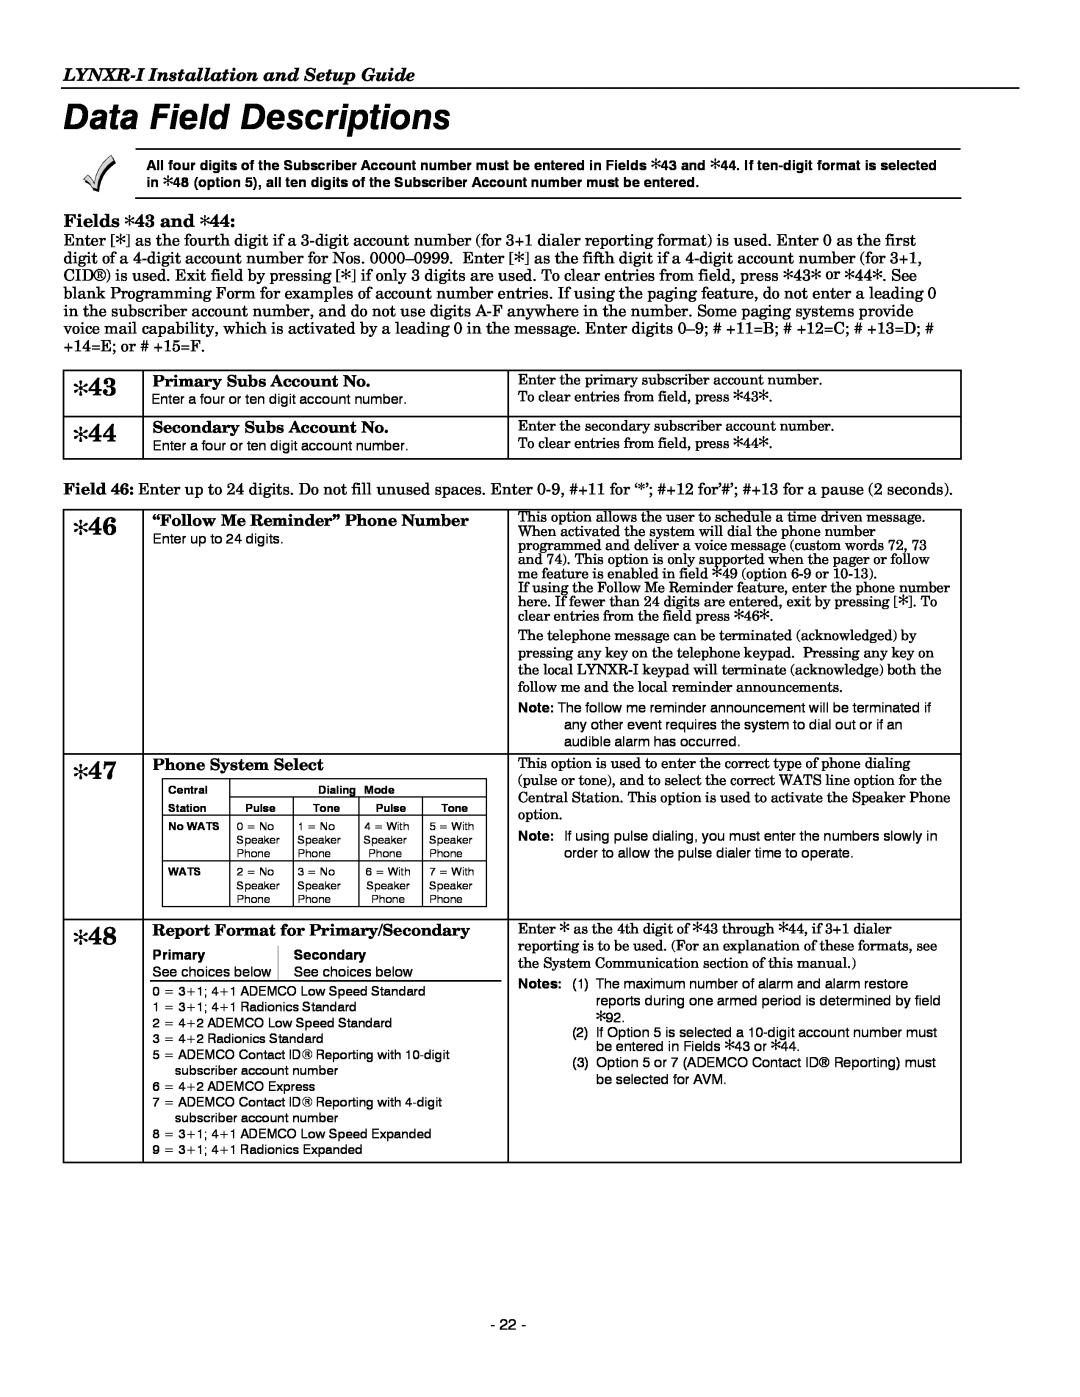 Honeywell K14114 3/06 Rev.B setup guide Fields 43 and, Data Field Descriptions, LYNXR-IInstallation and Setup Guide 